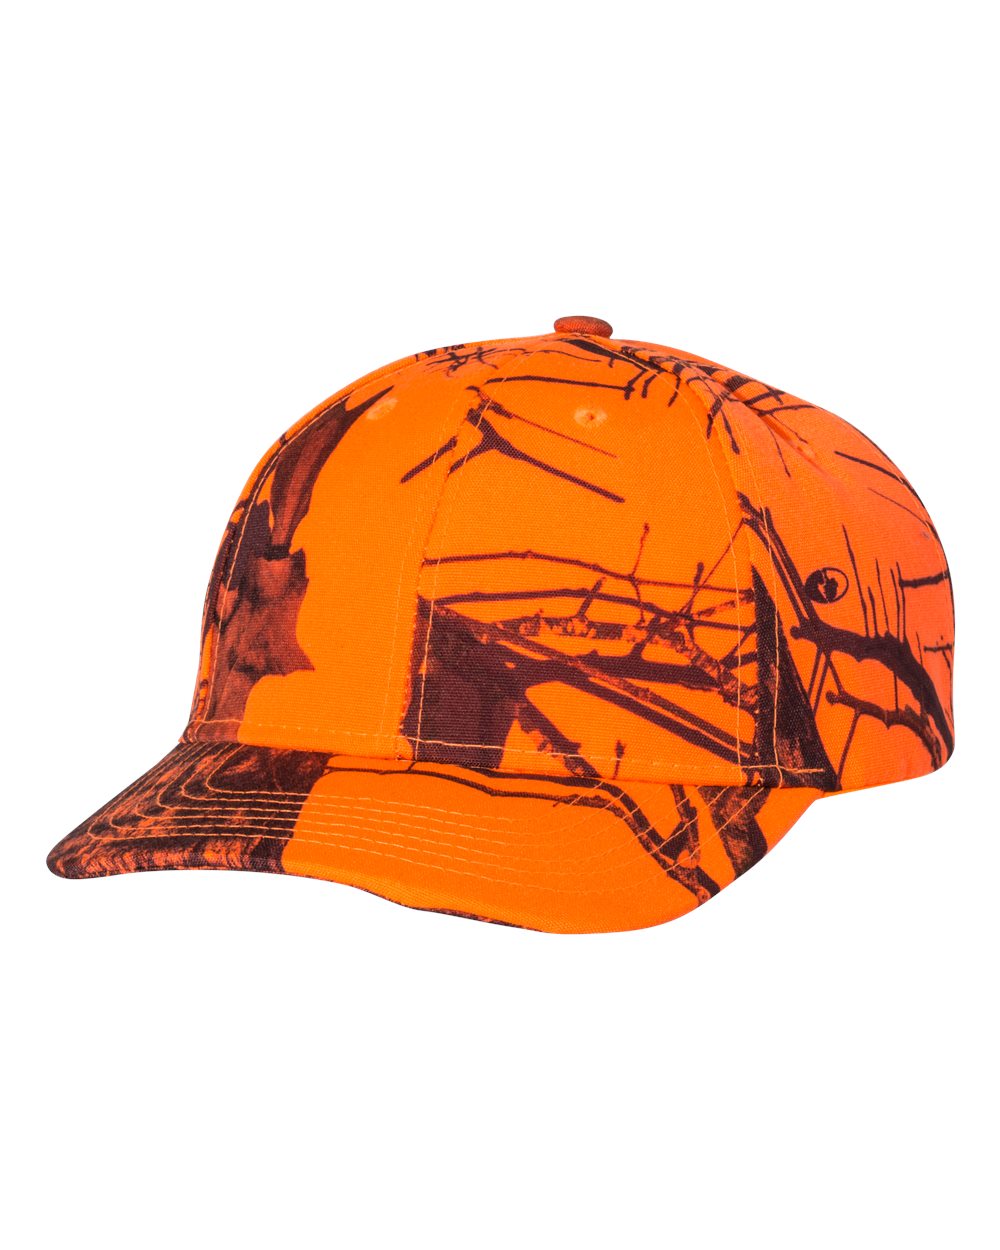 Kati Cap Mossy Oak Break-Up Blaze Orange Hat NEW SN200 Baseball Hat 